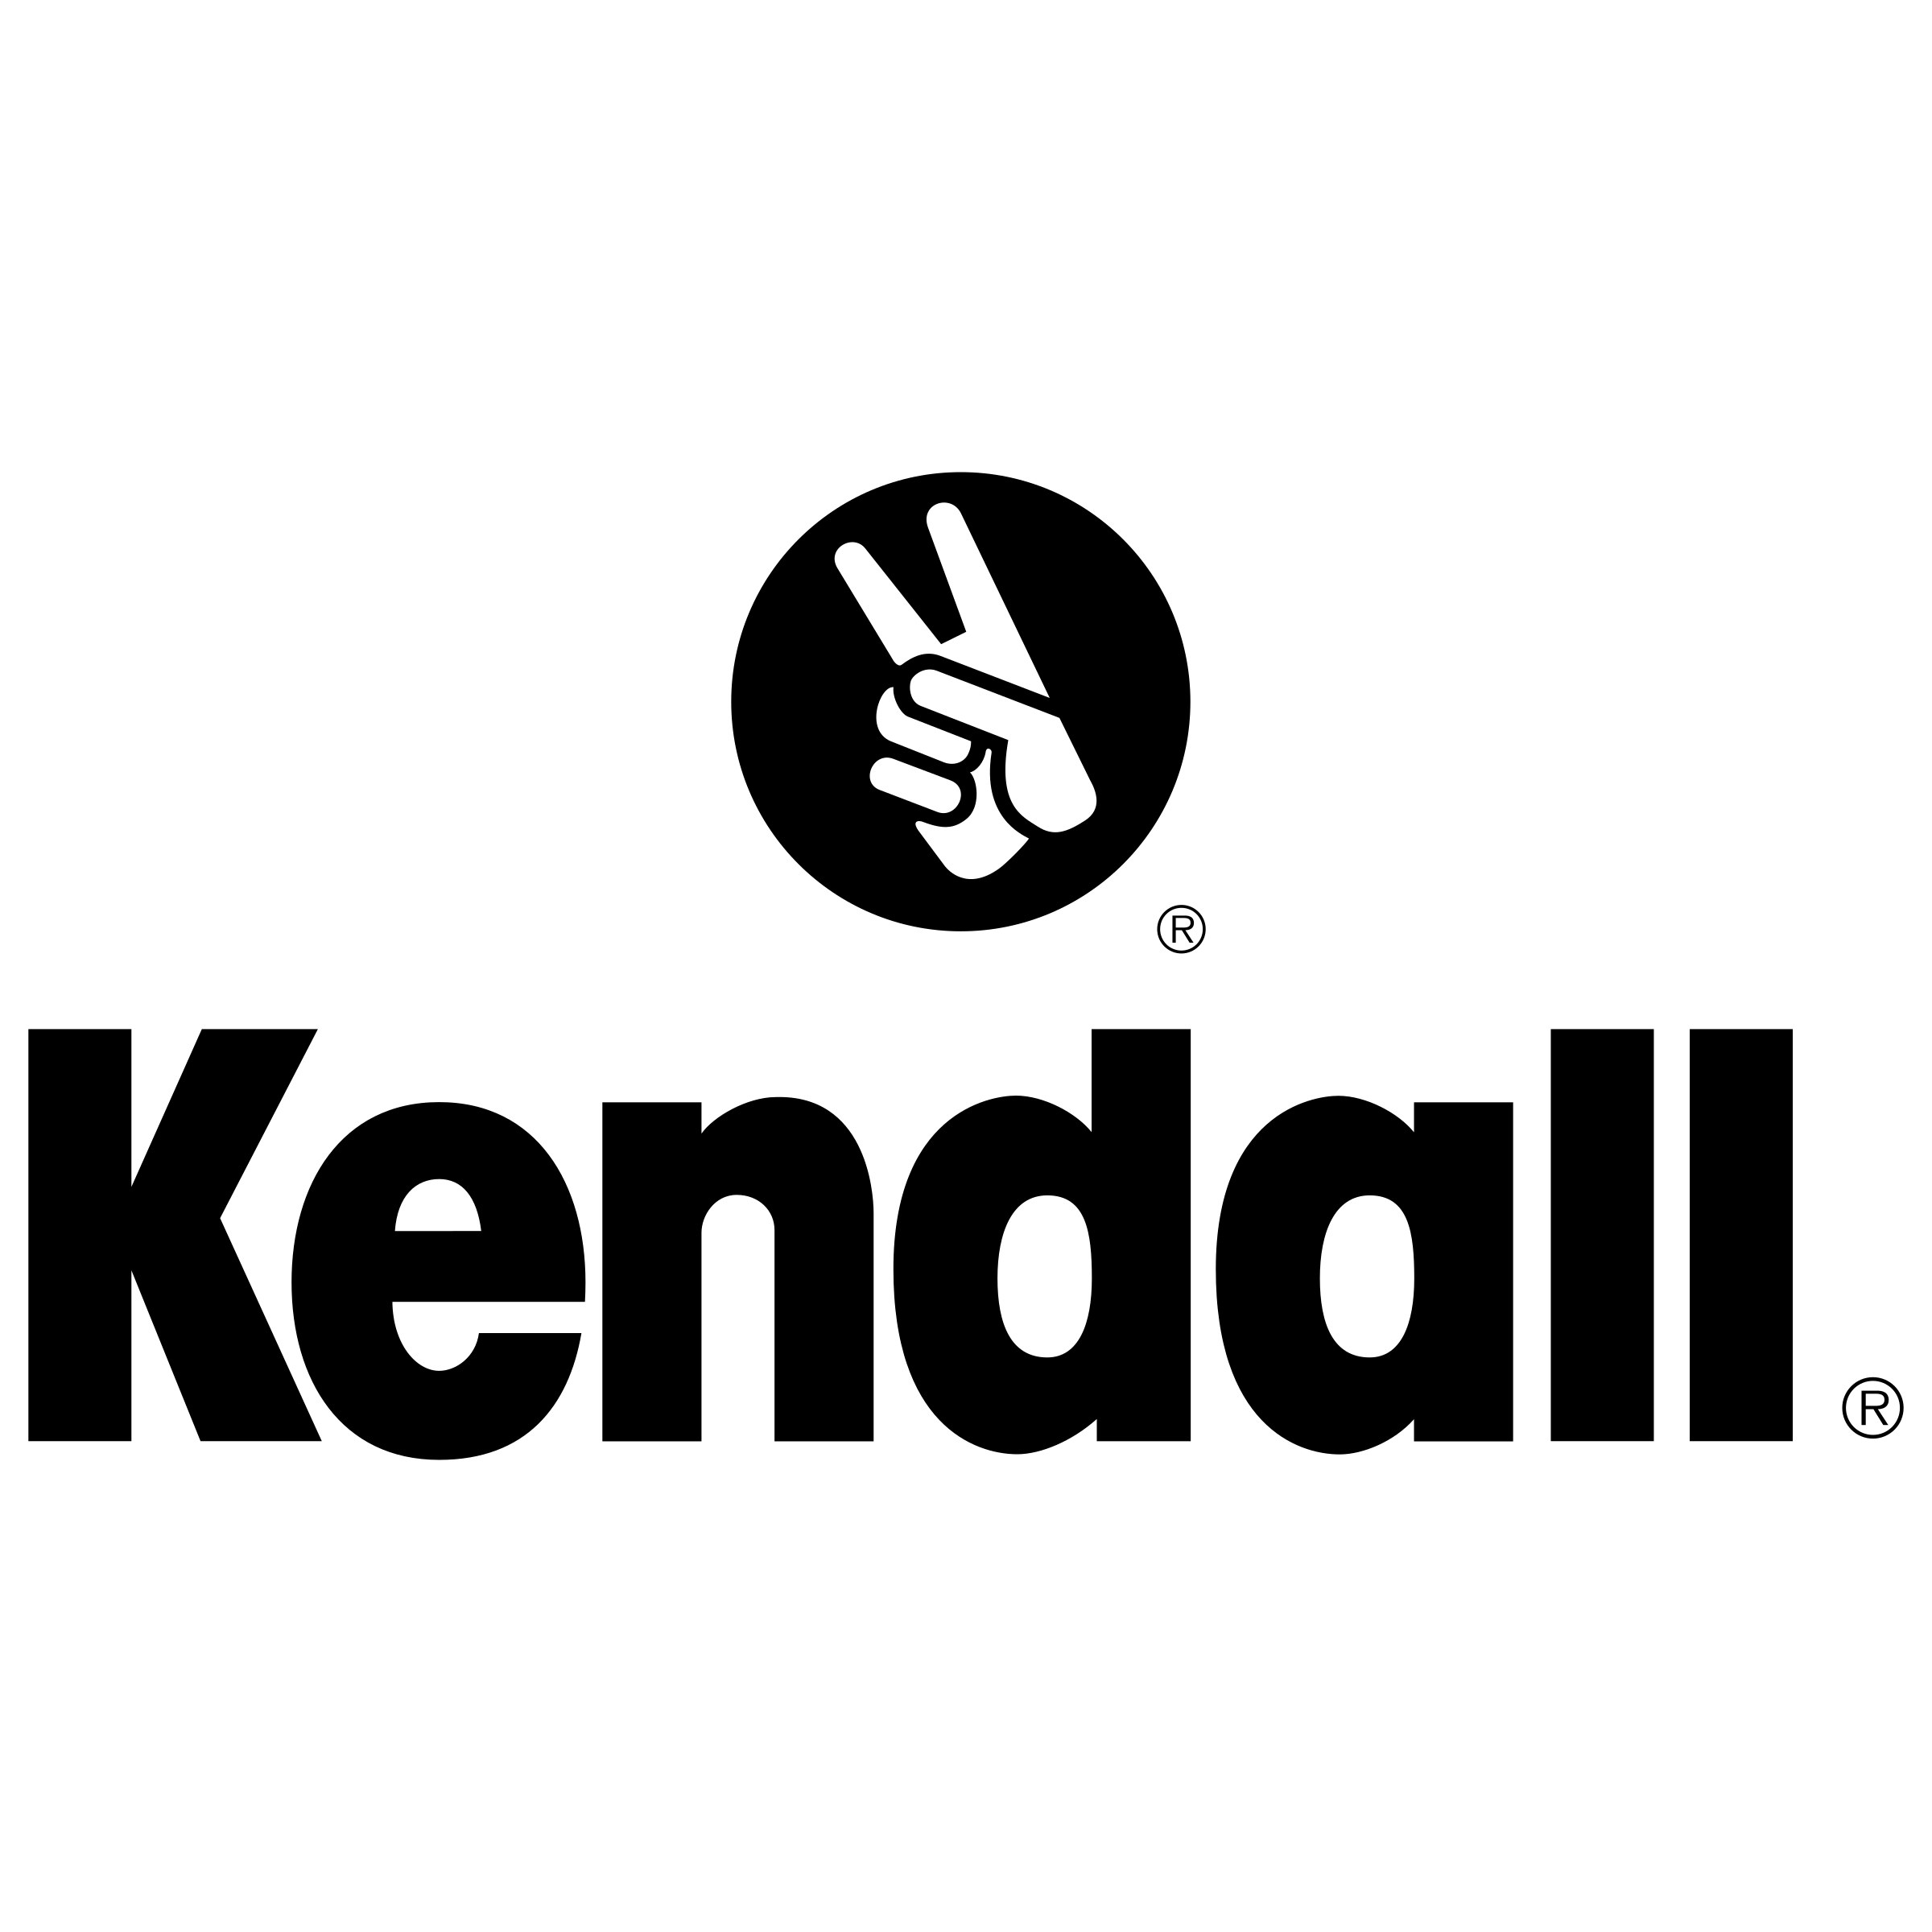 Kendall Logo - Kendall Logo PNG Transparent & SVG Vector